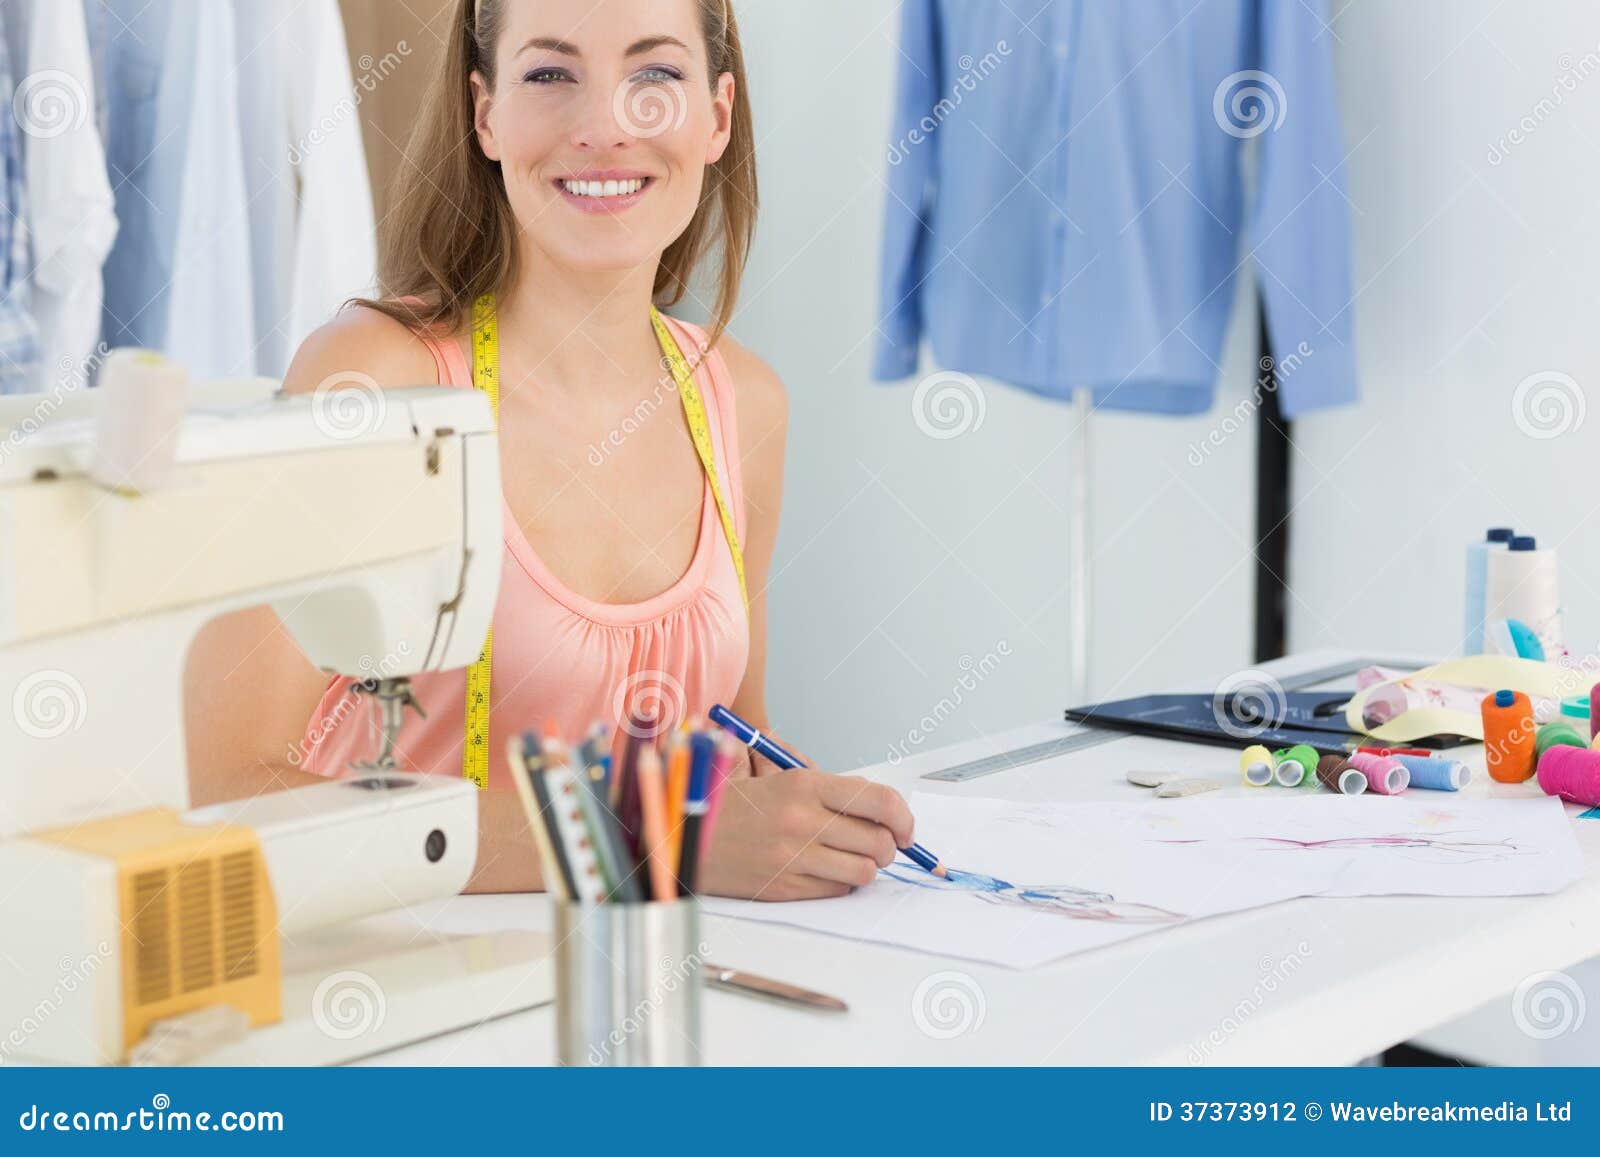 Smiling Female Fashion Designer Working on Her Designs Stock Photo ...